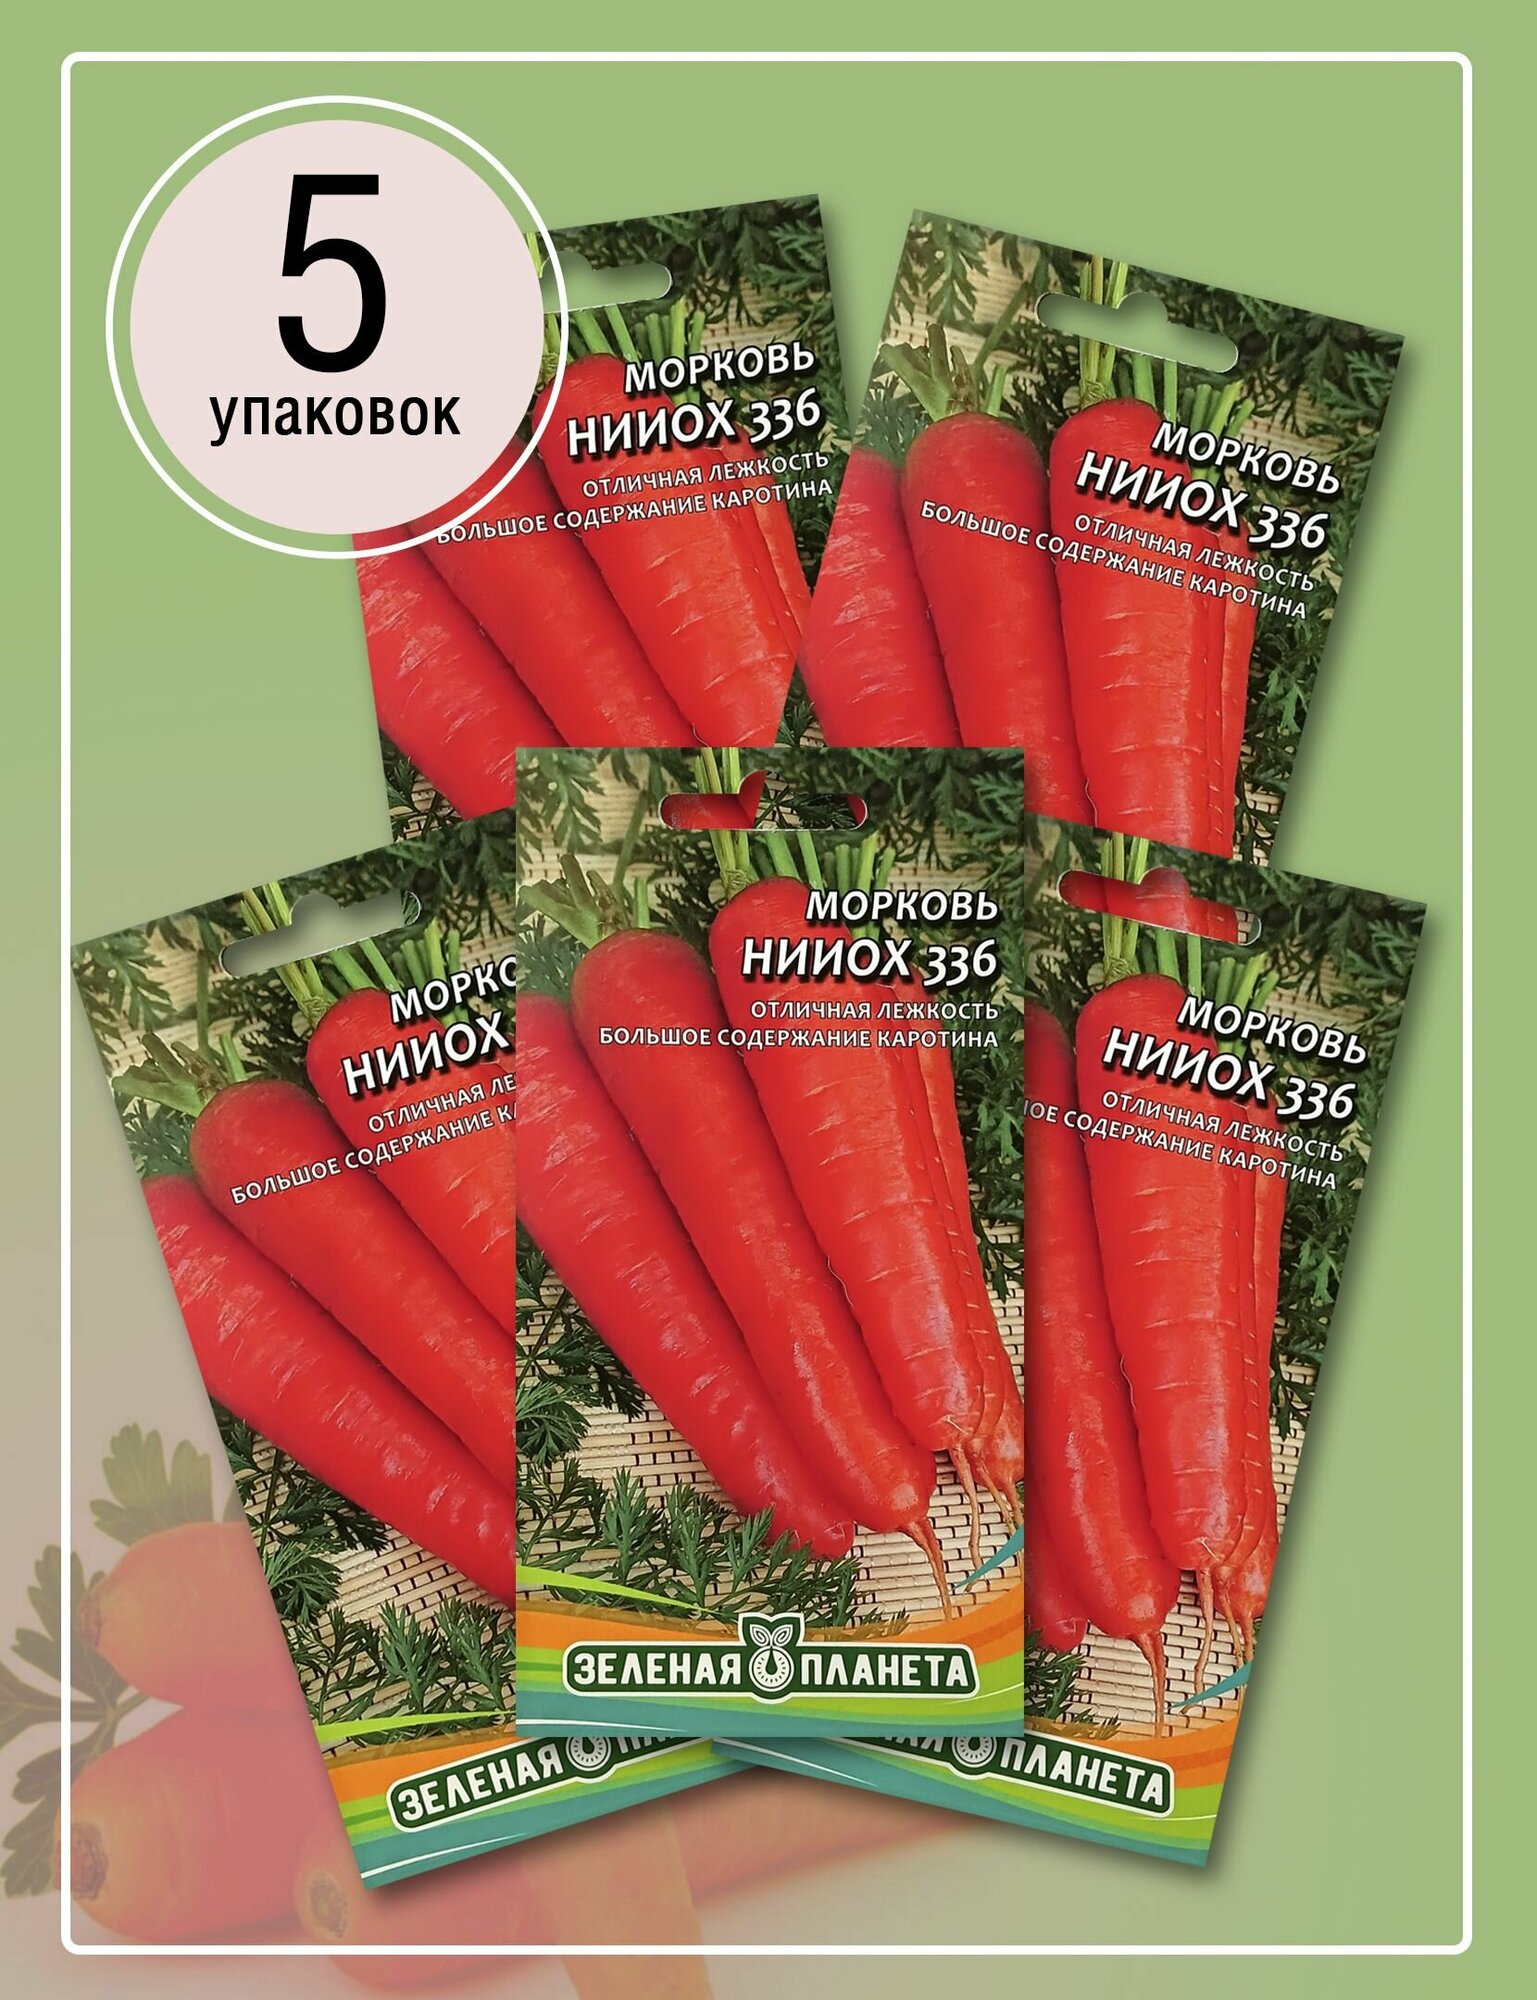 Морковь нииох 336 (5 пакетов по 2гр)